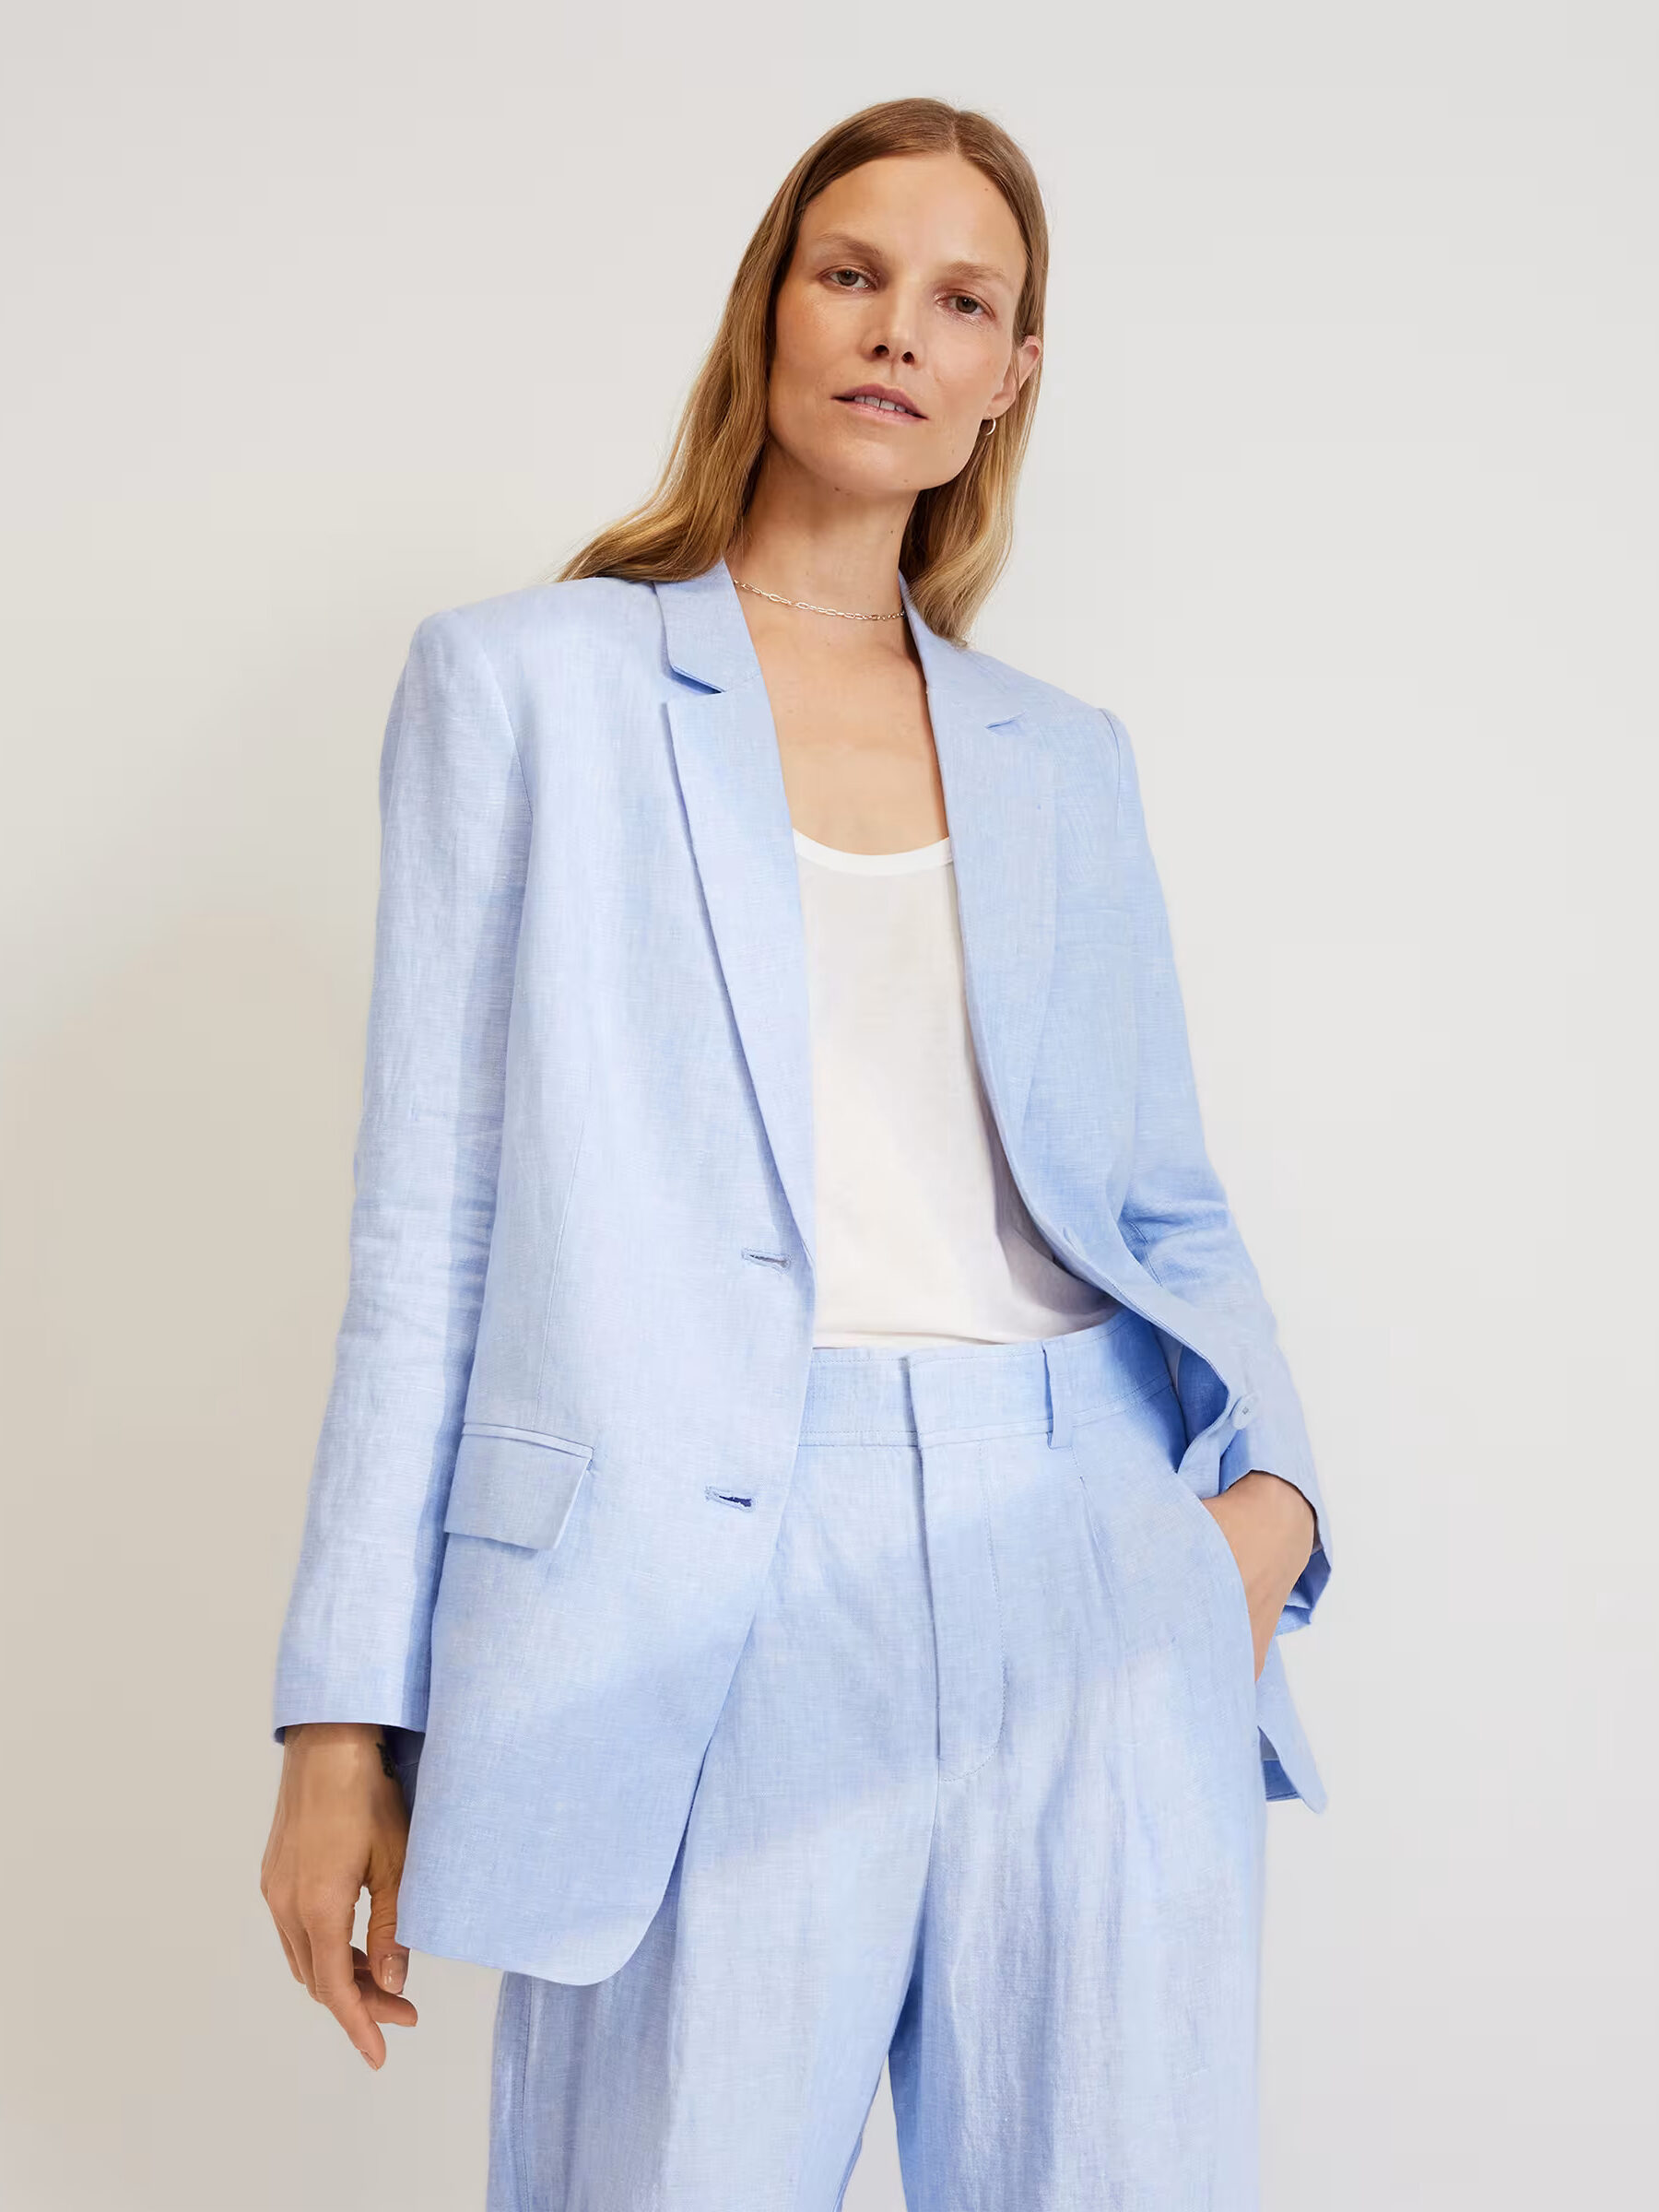 High Street Boss Lady Fancy Pantsuit, Suit Coat